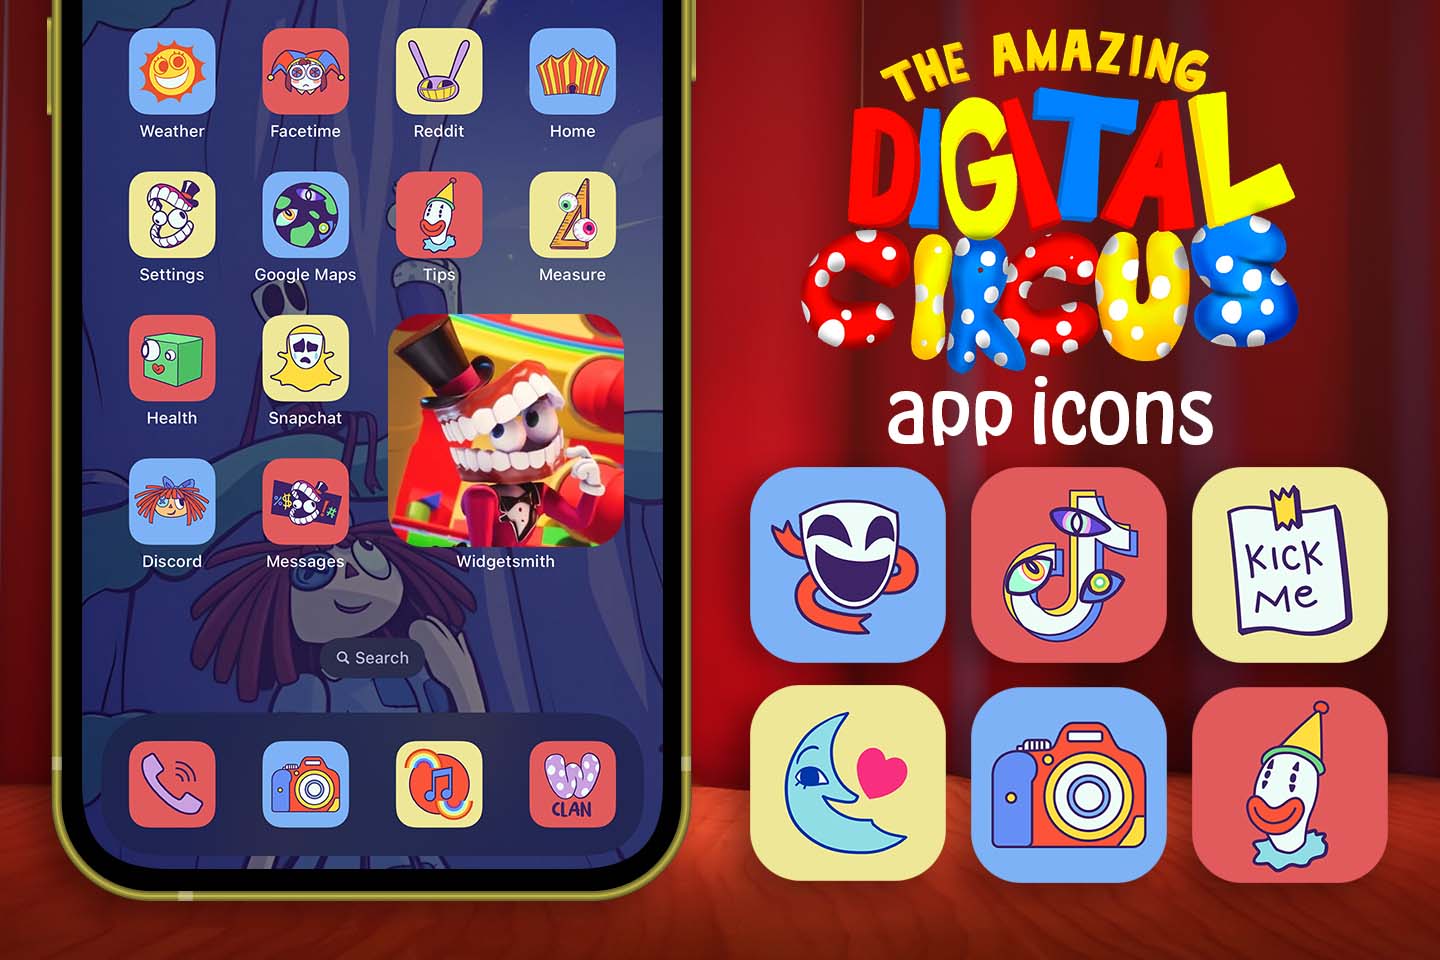 L’incroyable pack d’icônes de l’application Digital Circus